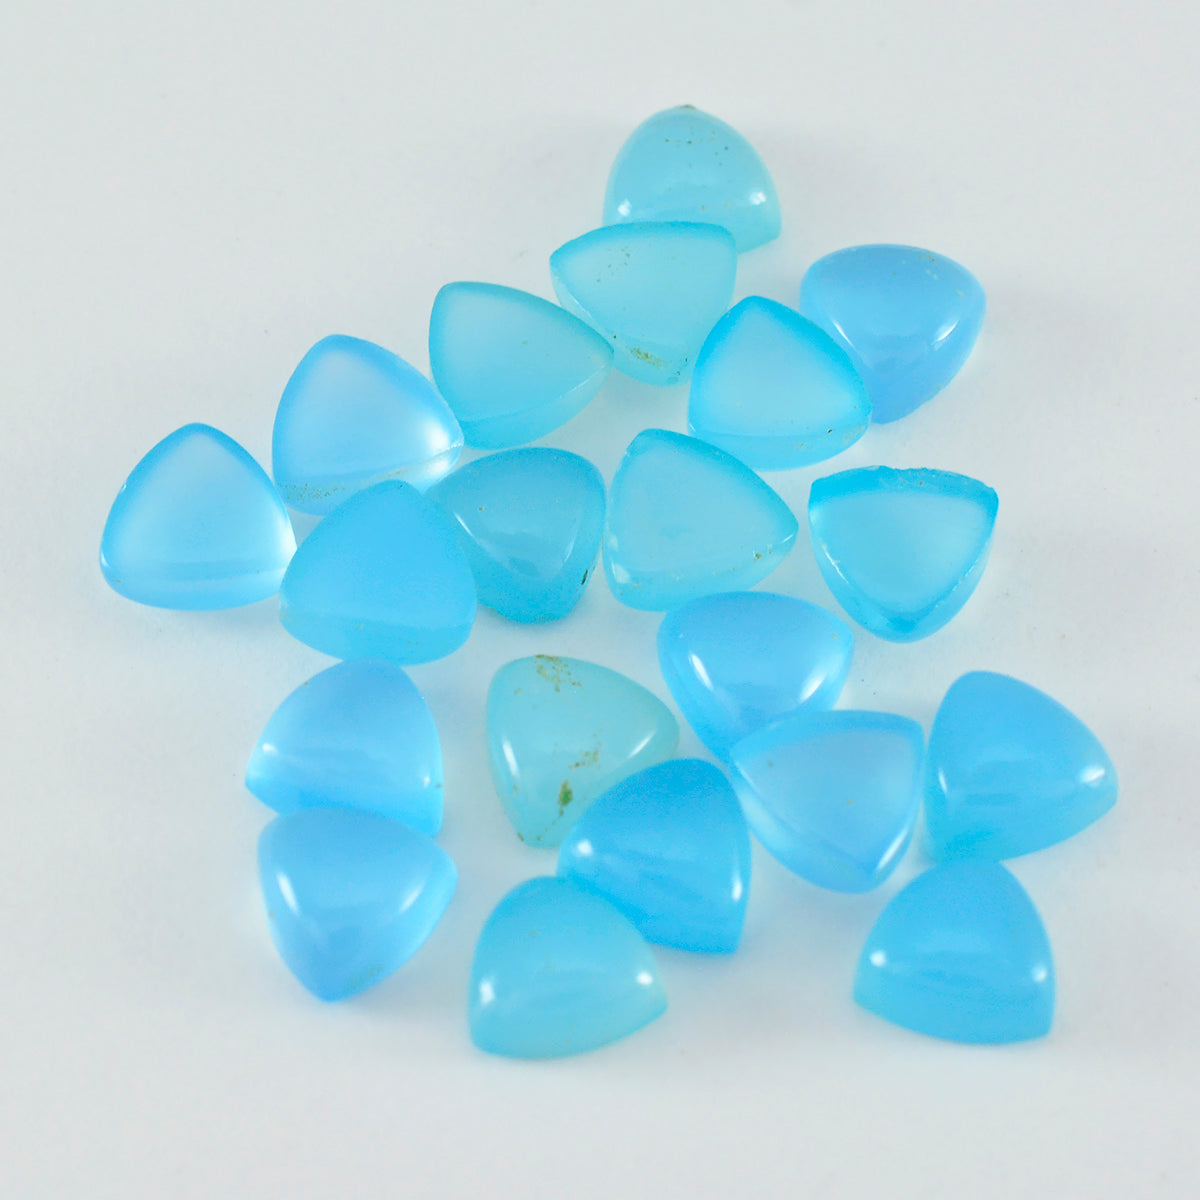 riyogems 1 шт. синий халцедон кабошон 5x5 мм форма триллиона драгоценный камень превосходного качества